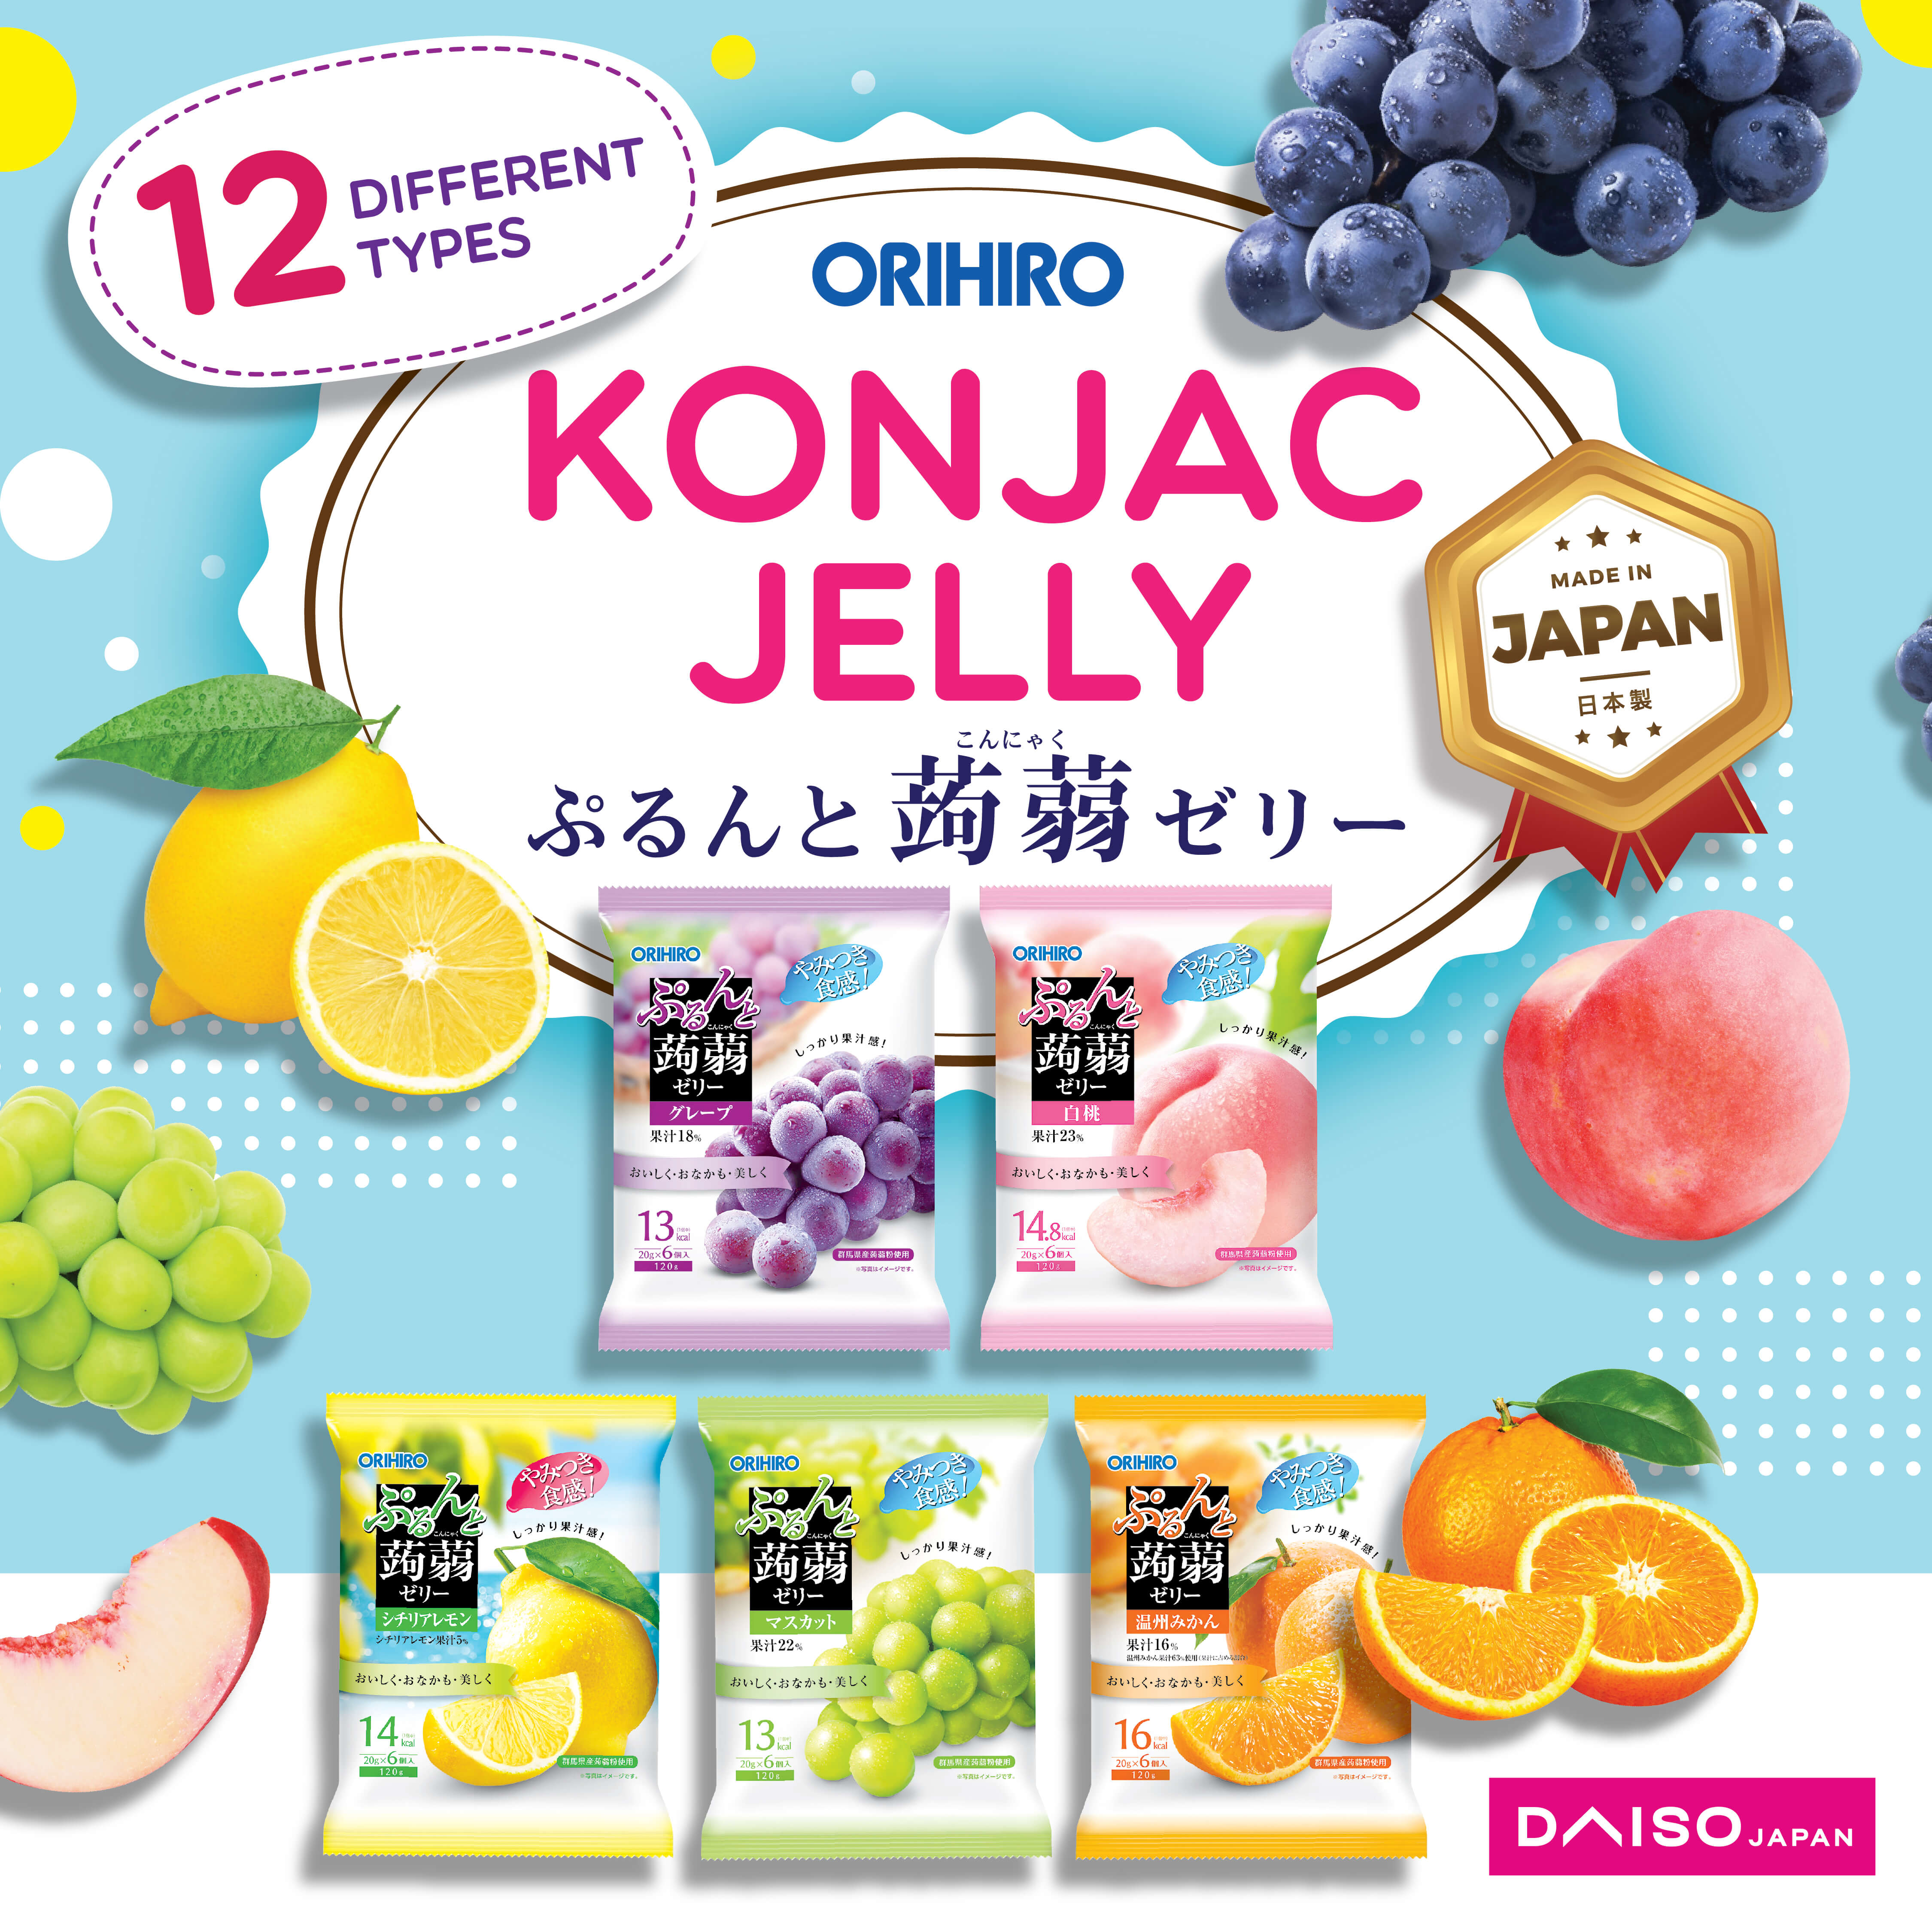 ORIHIRO Konjac Jelly Snack – A Must Try!  *SELLING FAST*